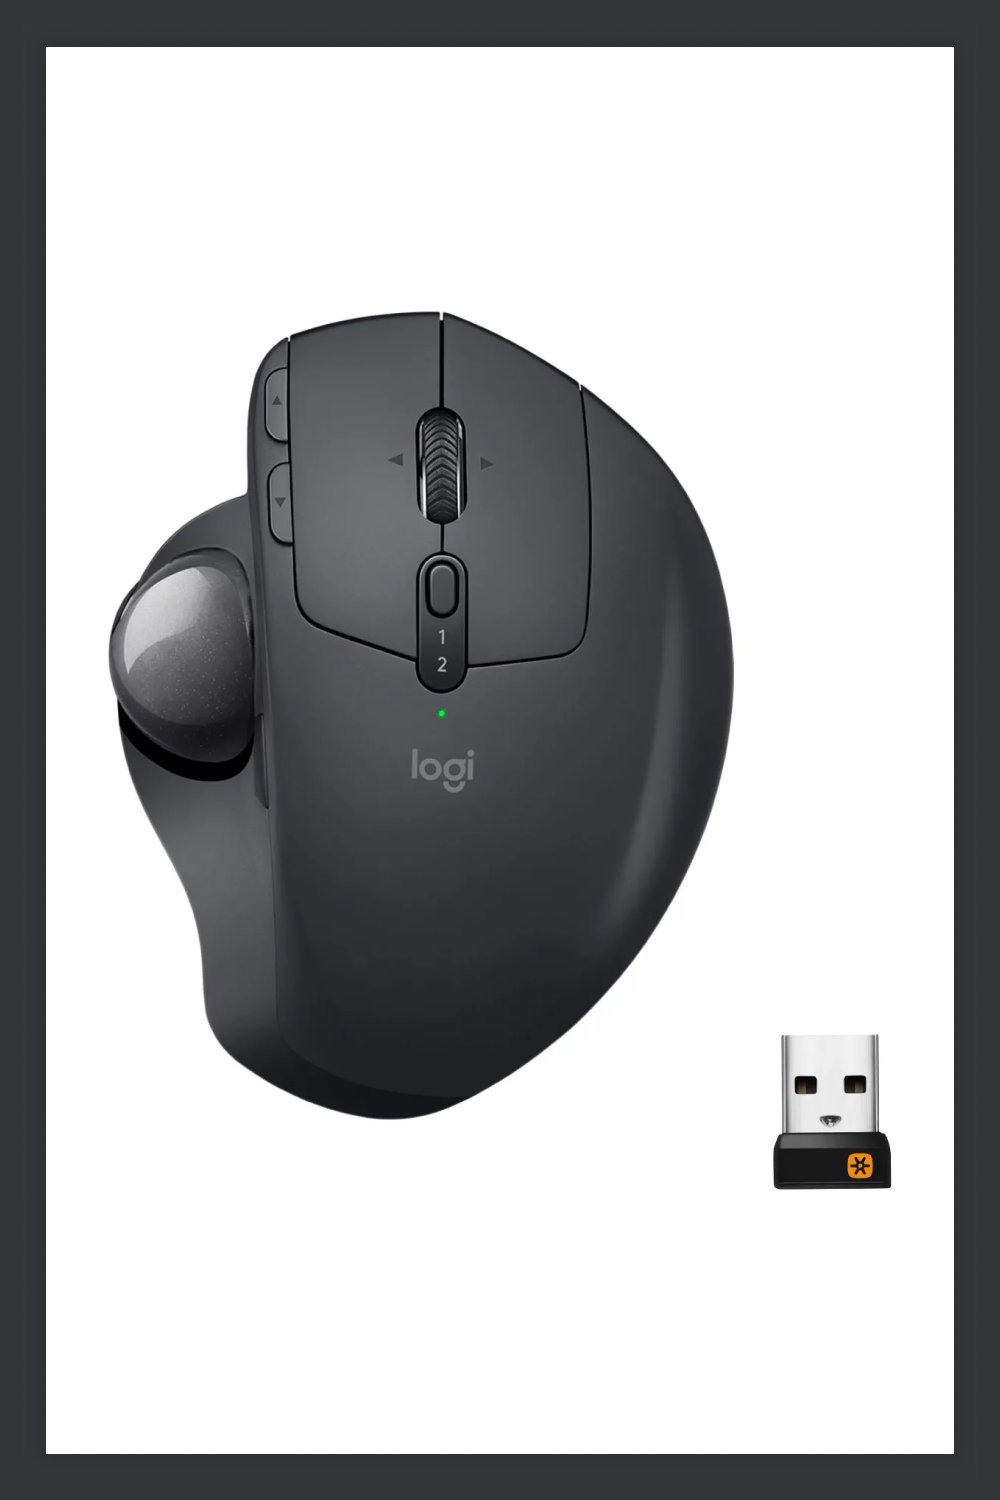 Logitech MX Ergo Wireless Trackball Mouse.